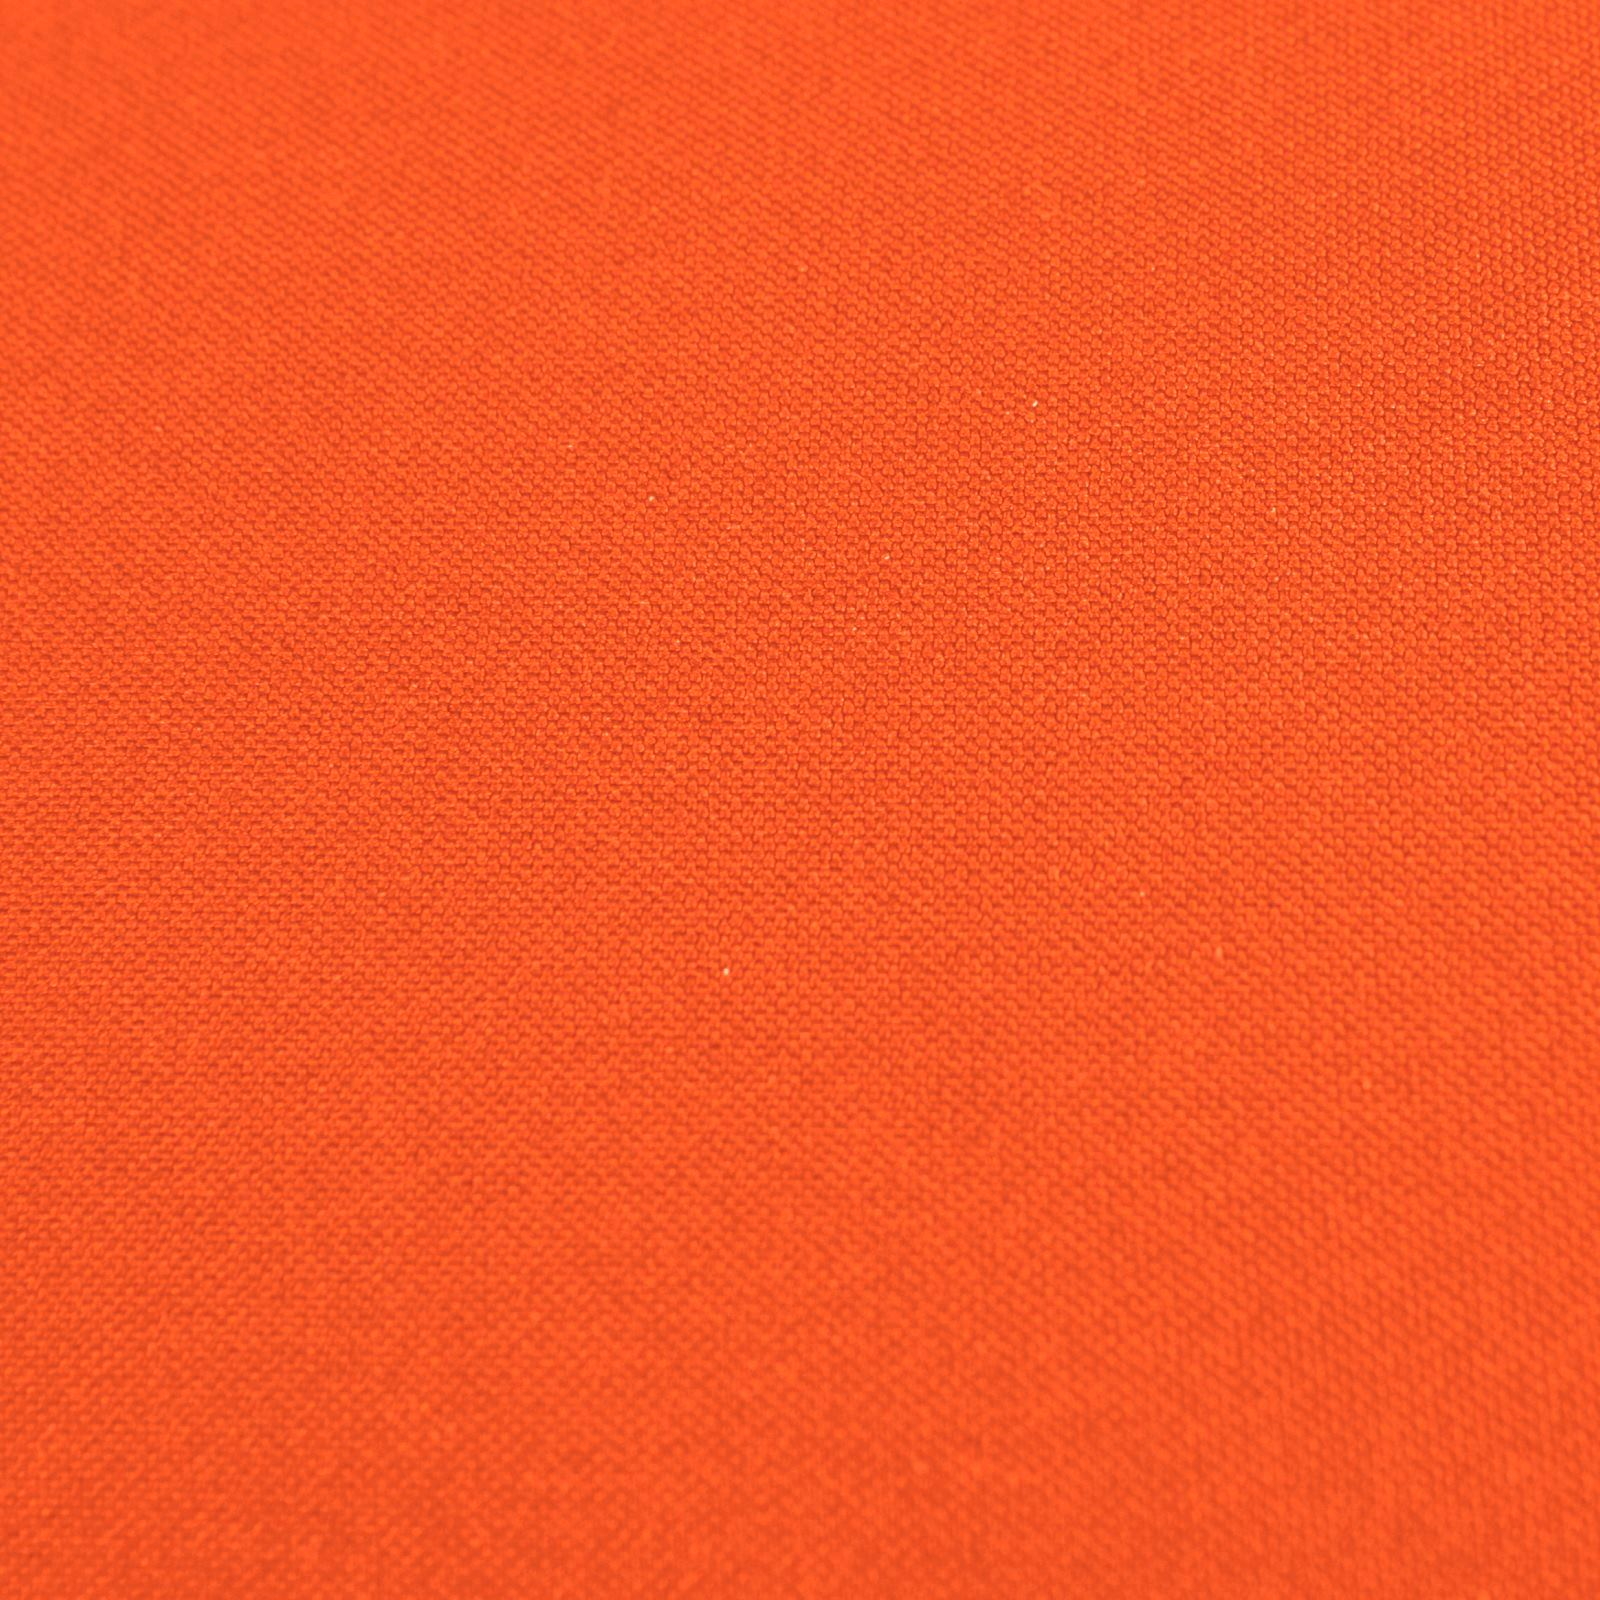 Komplettkissen Polyester-Orange / 40x40 cm